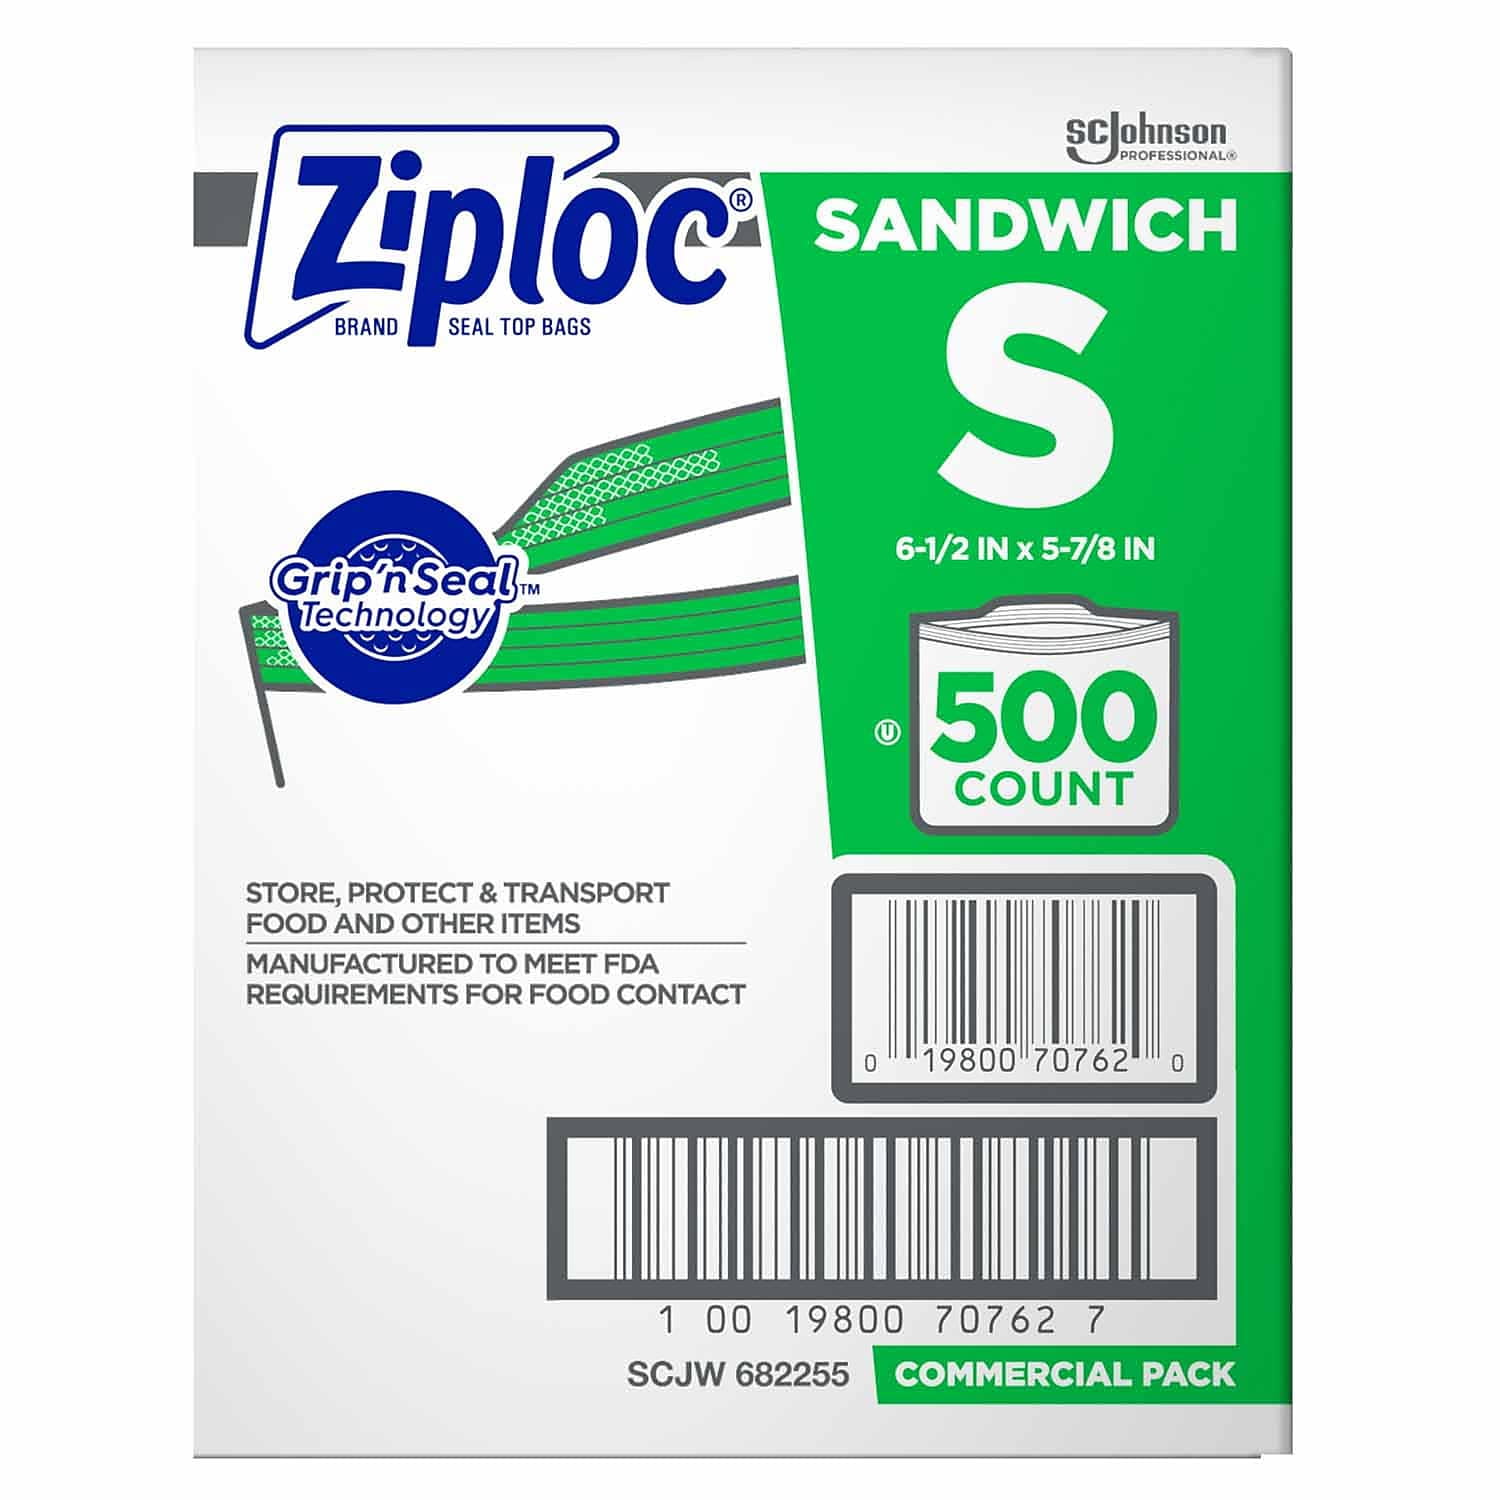 Sandwich Double Zipper Bags - 500 Count